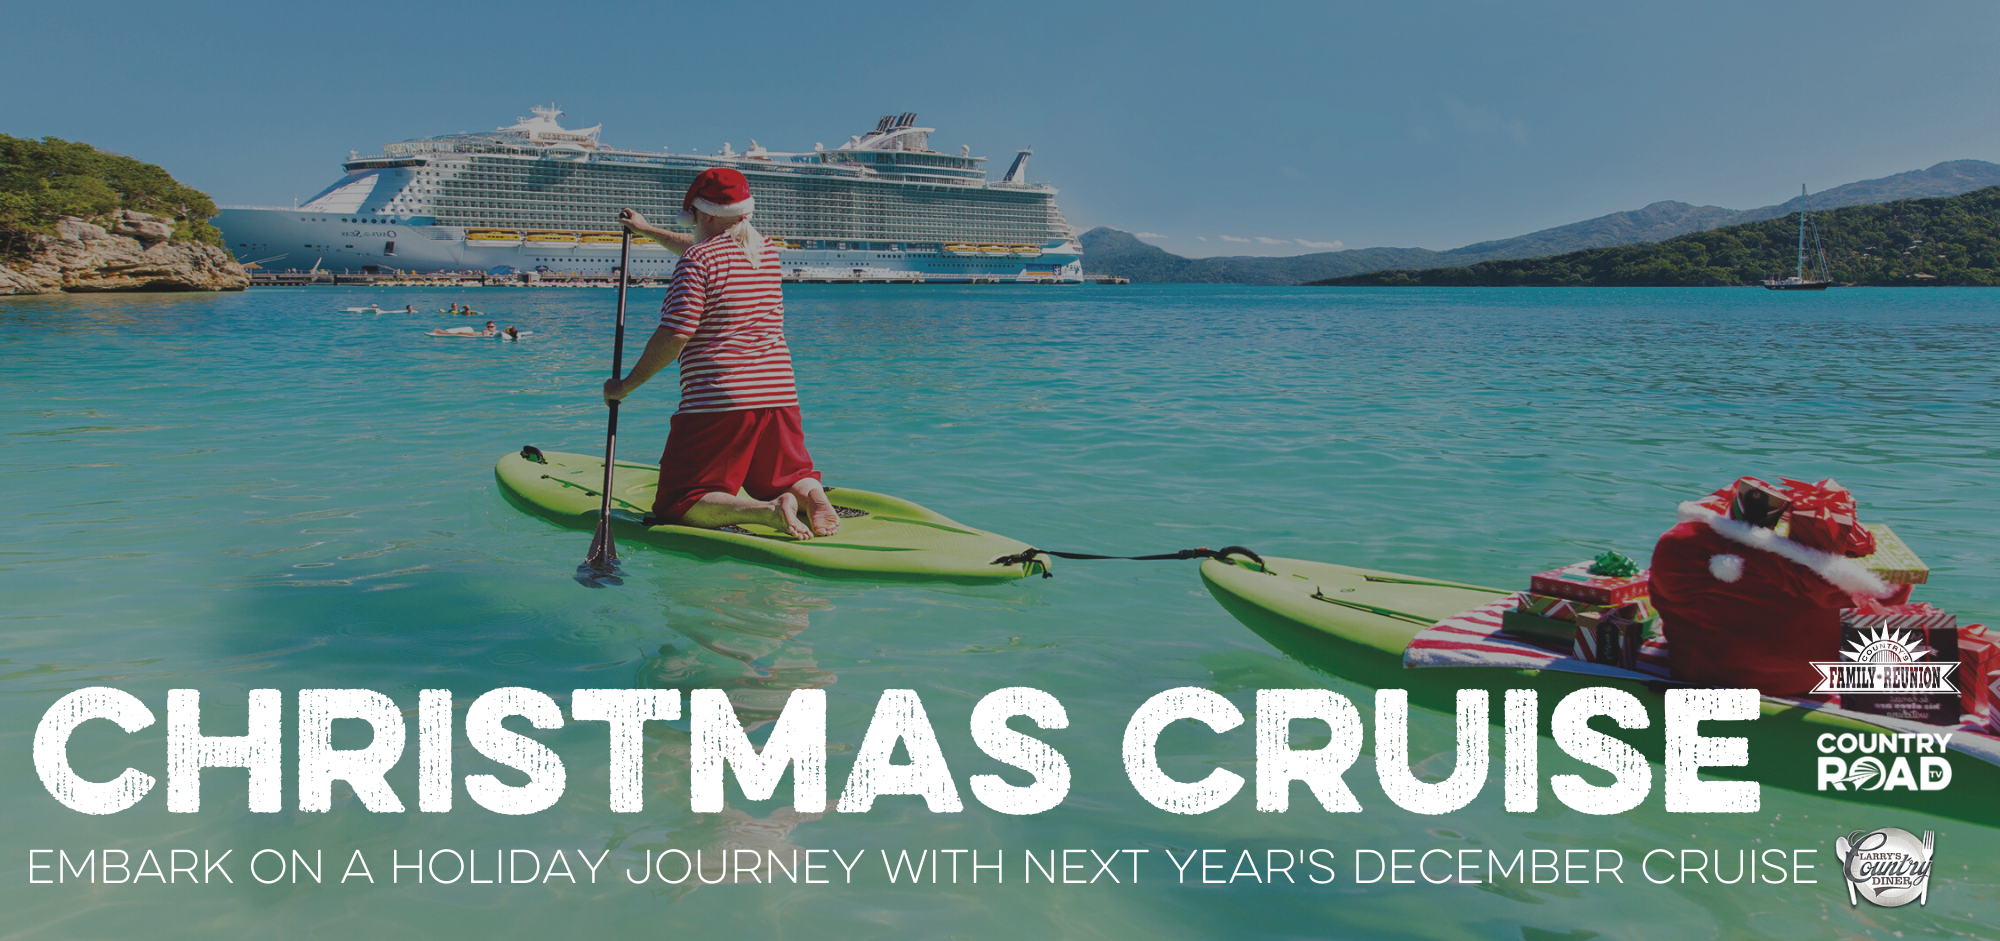 CFR Cruise 2020 Christmas Cruise 2020